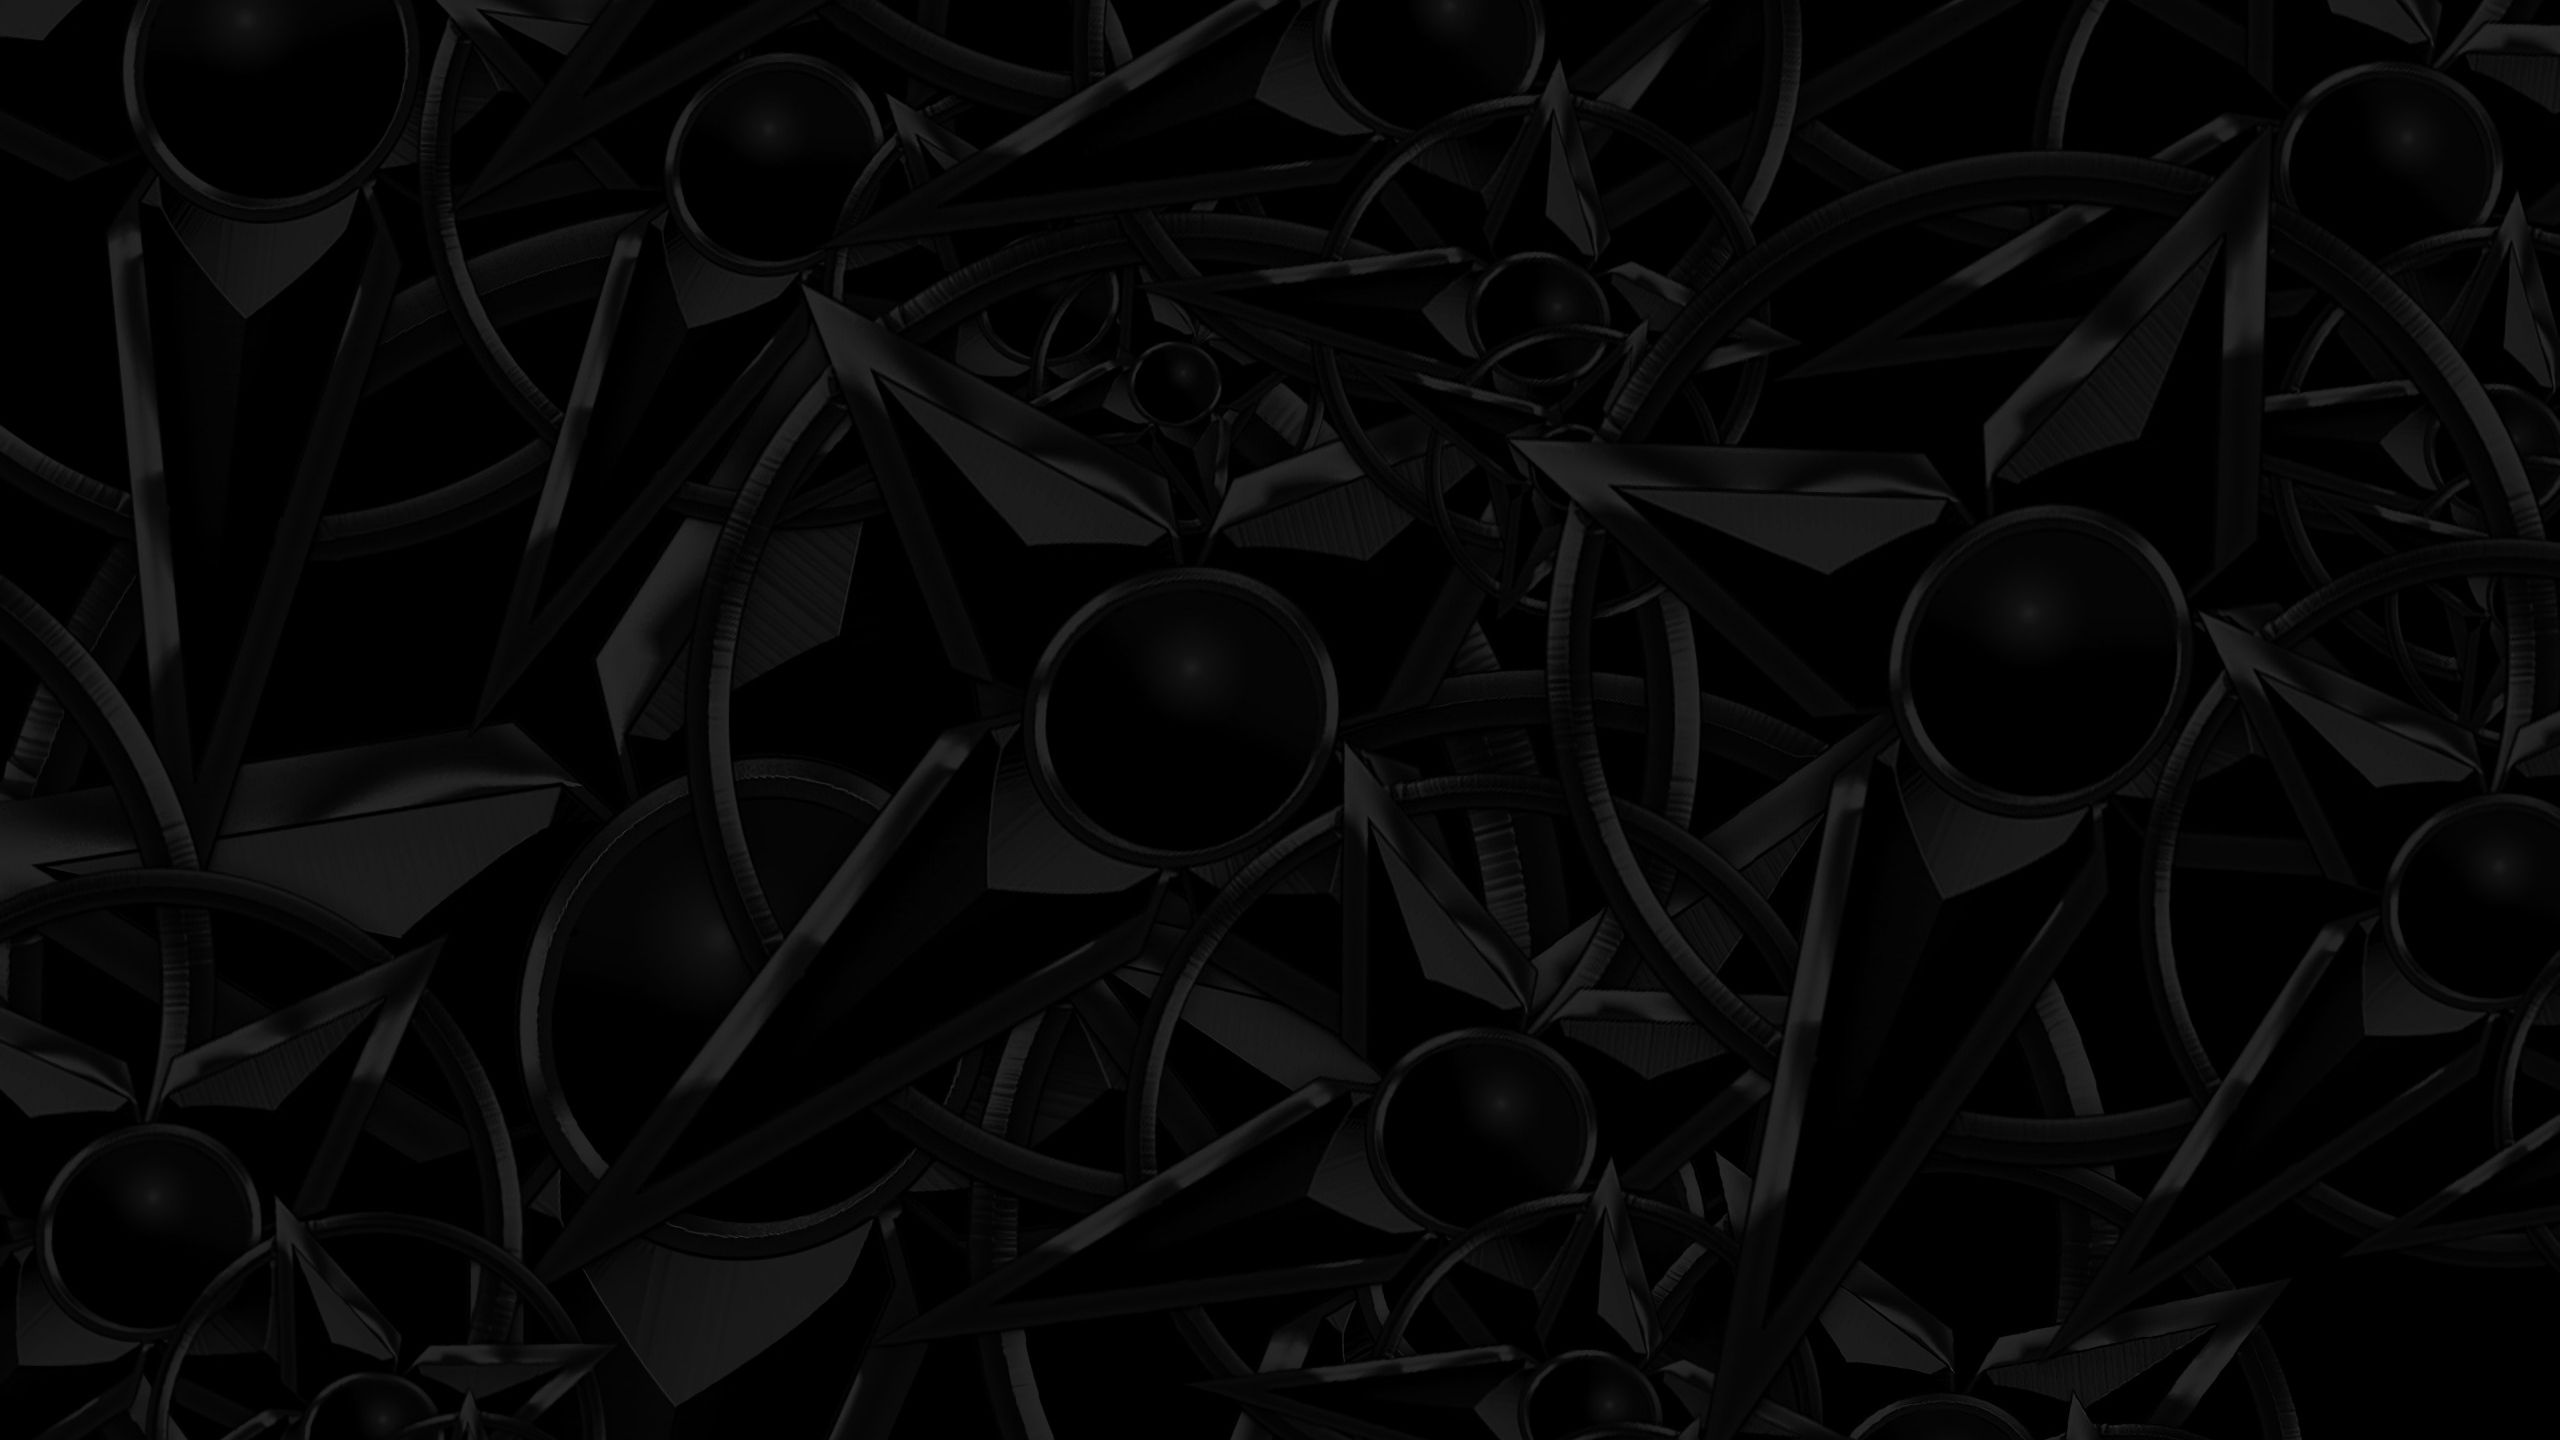 Download wallpaper 2560x1440 texture, black, dark, structure widescreen  16:9 hd background